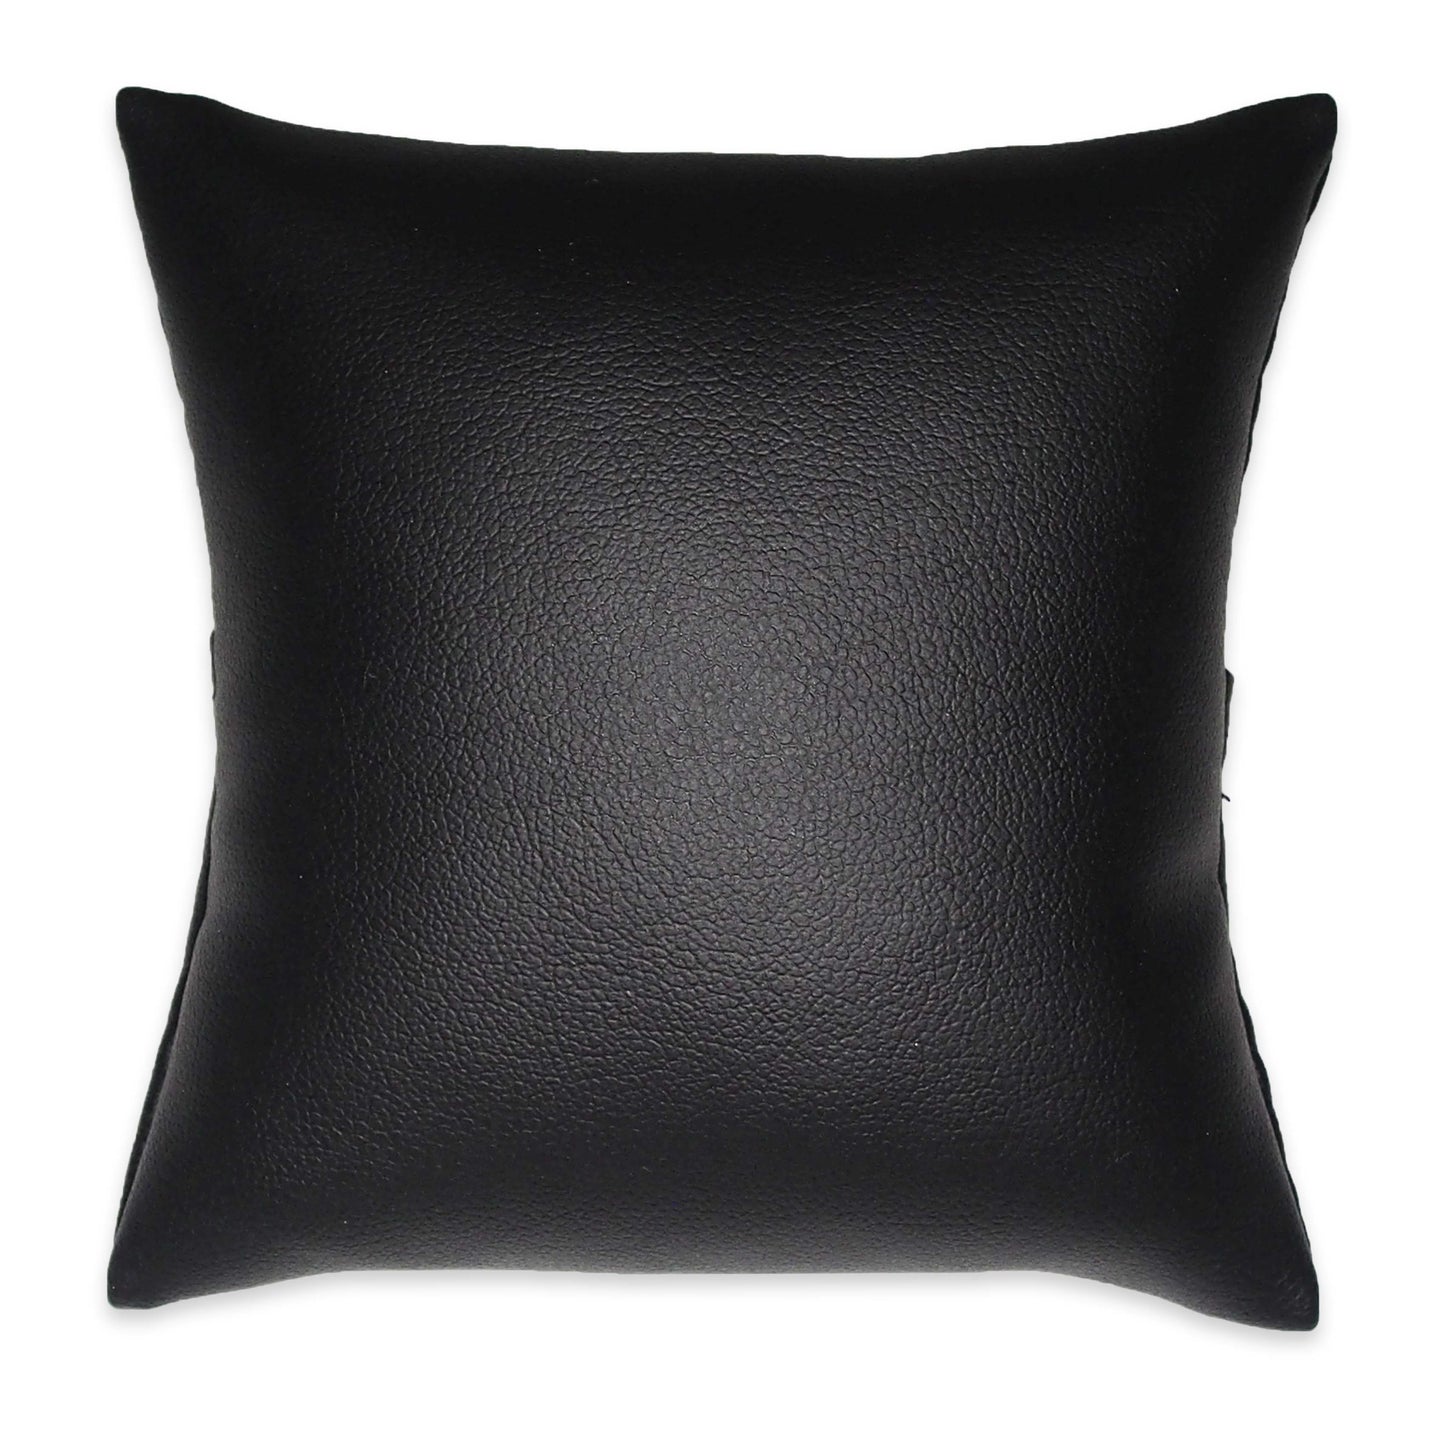 3" Black Leatherette Pillow Displays